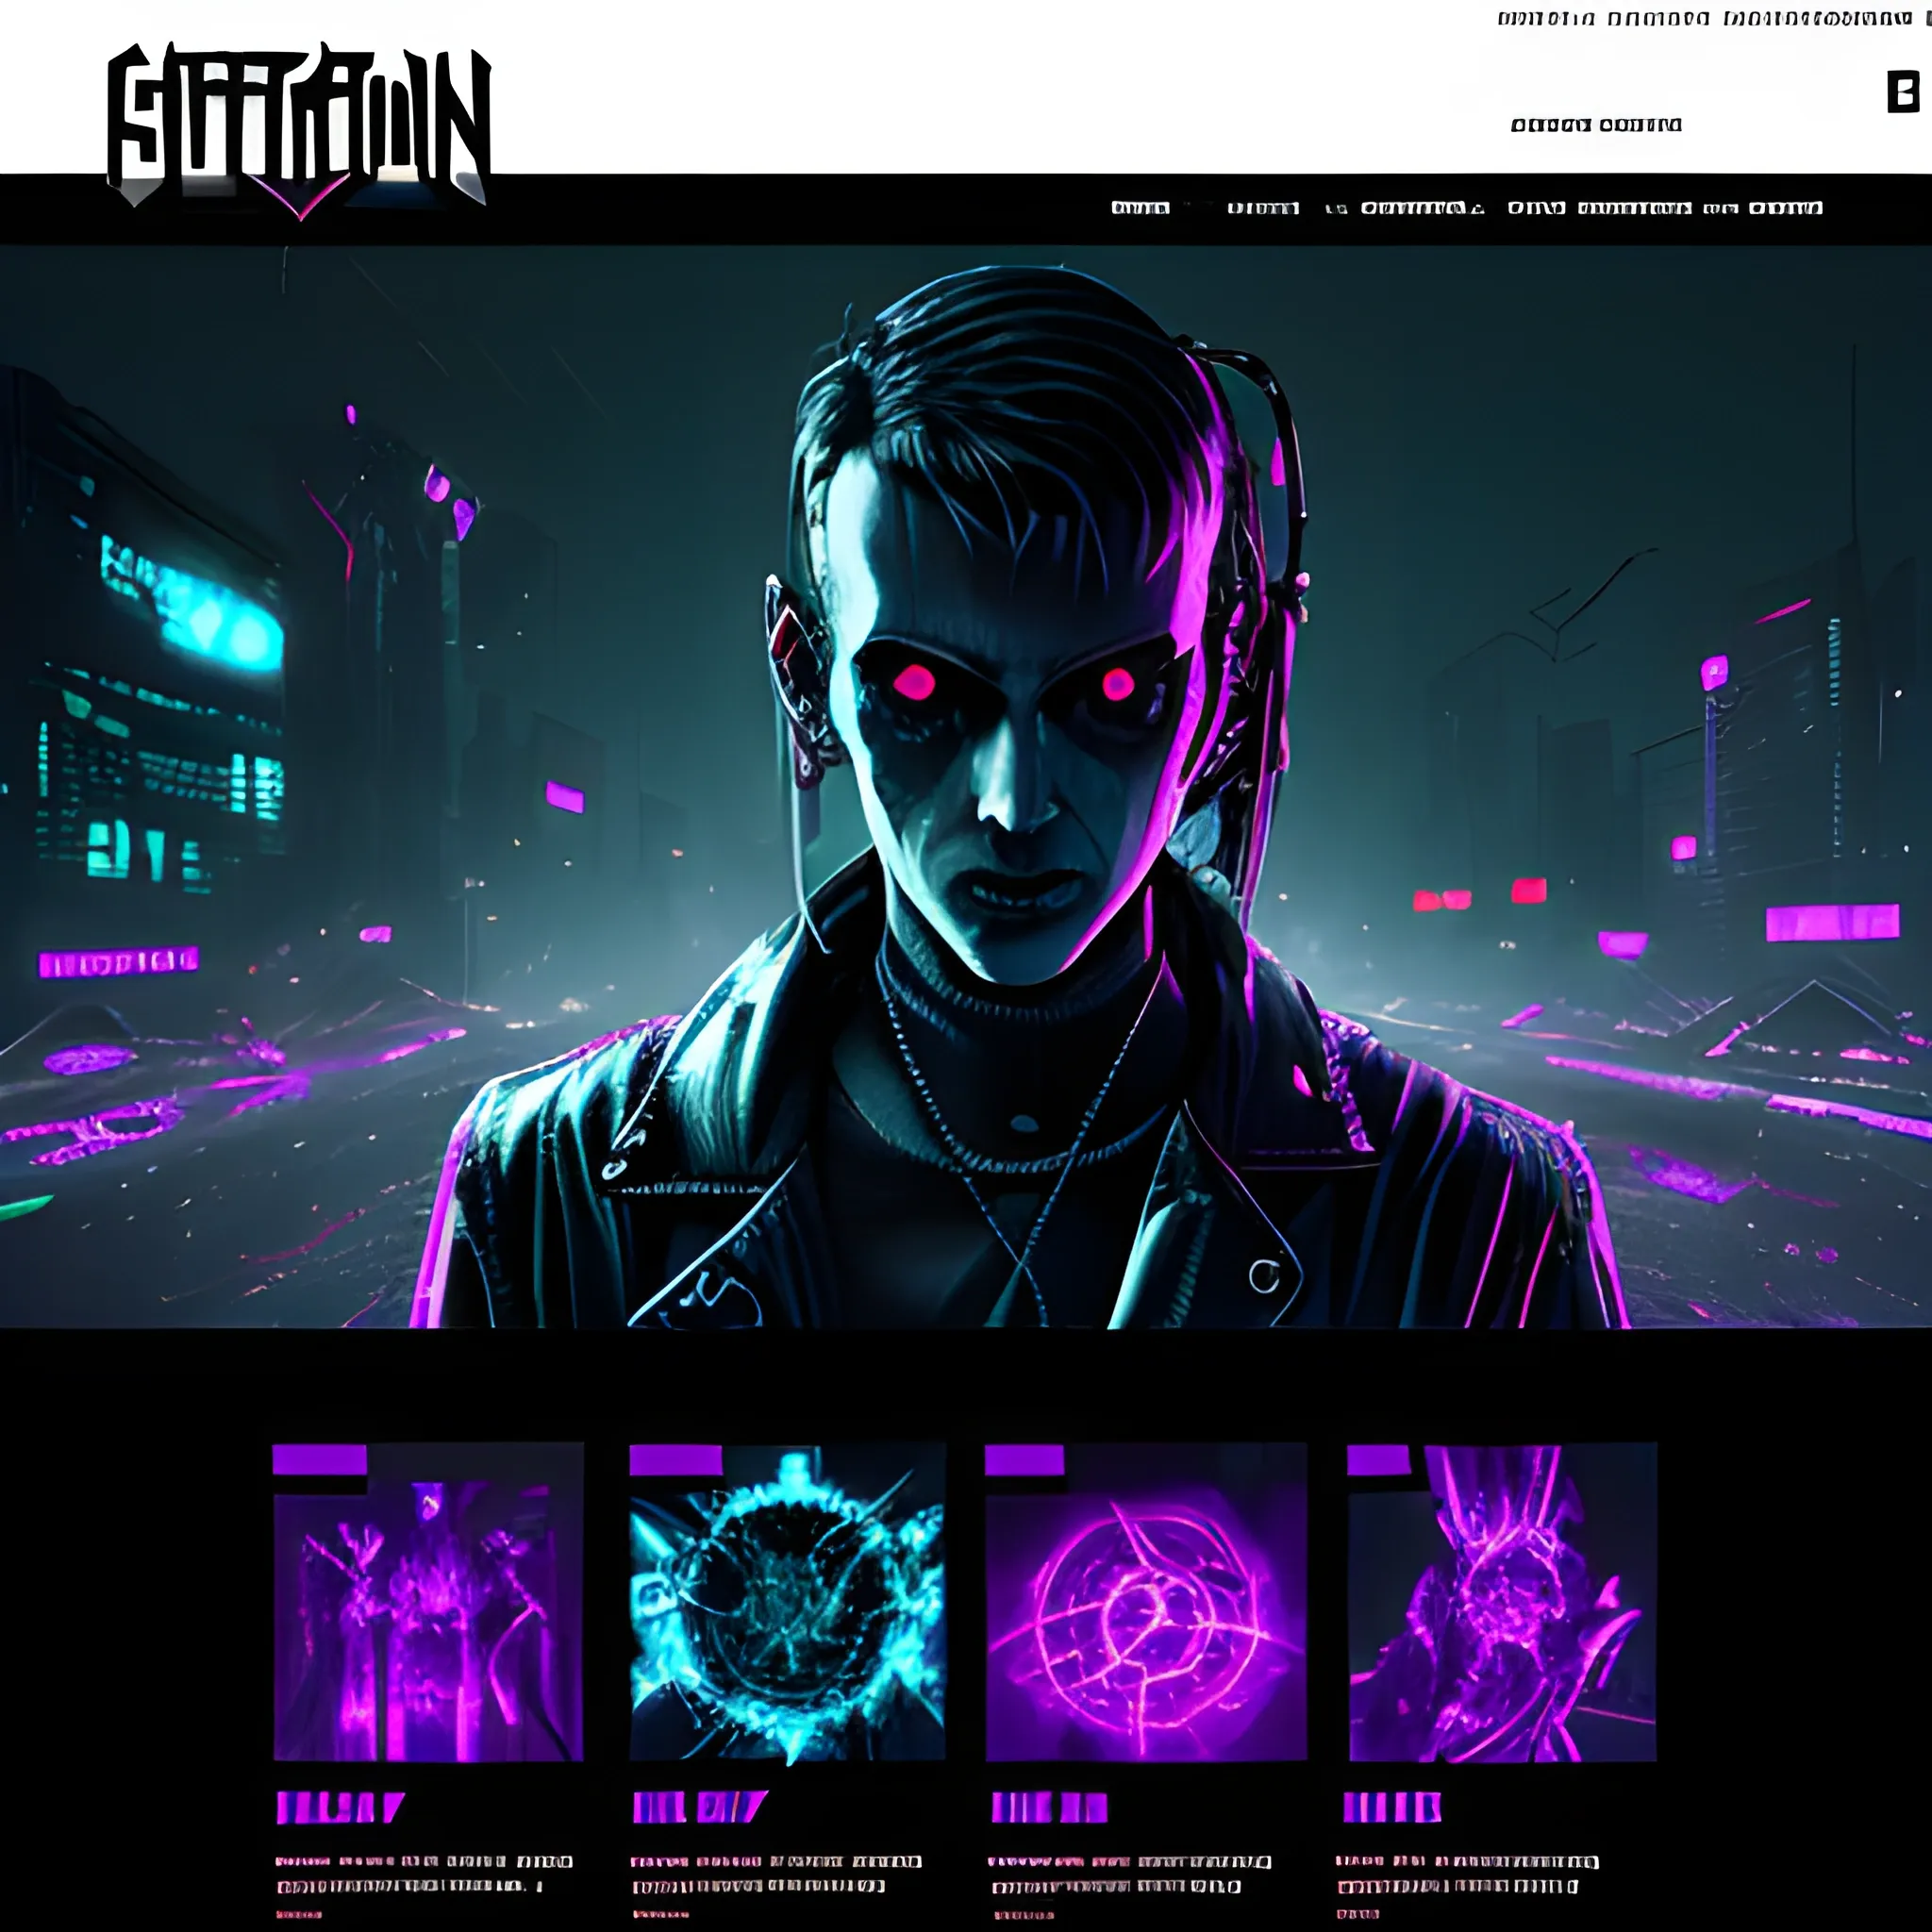 web page with dark cyberpunk style, Trippy